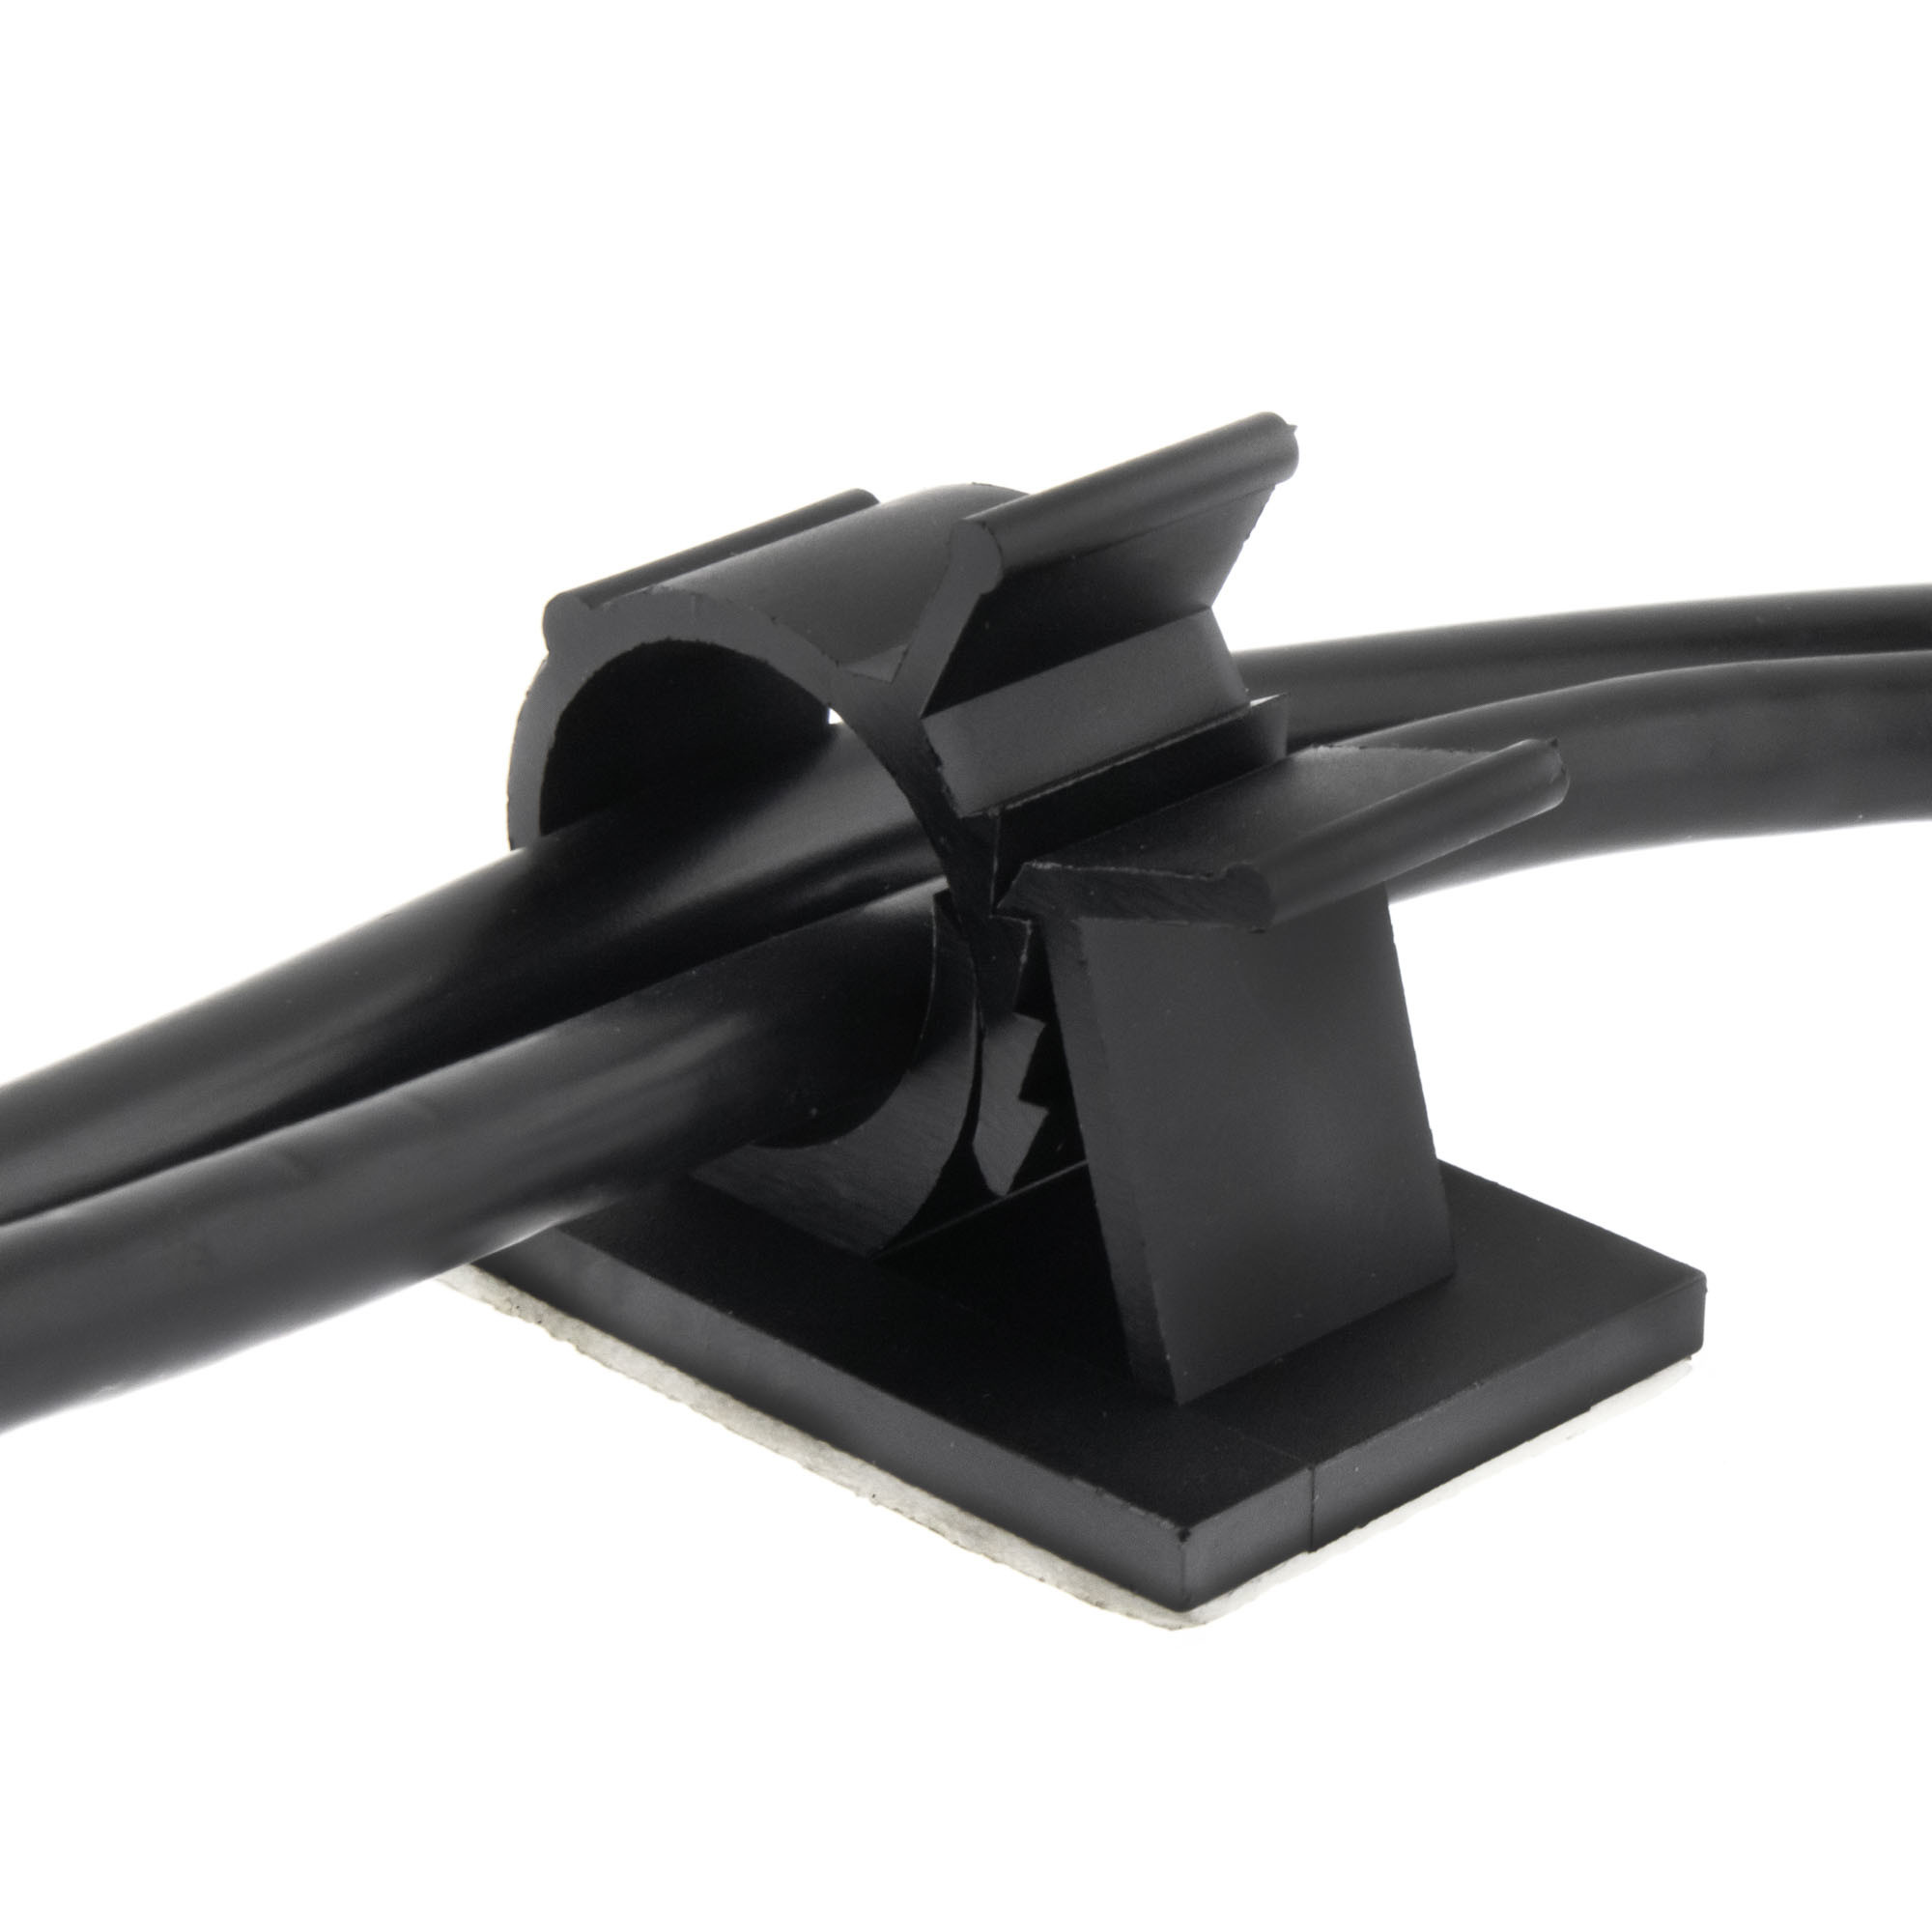 Cable clamp self-adhesive 12,6-15,4mm, black, 50PCS